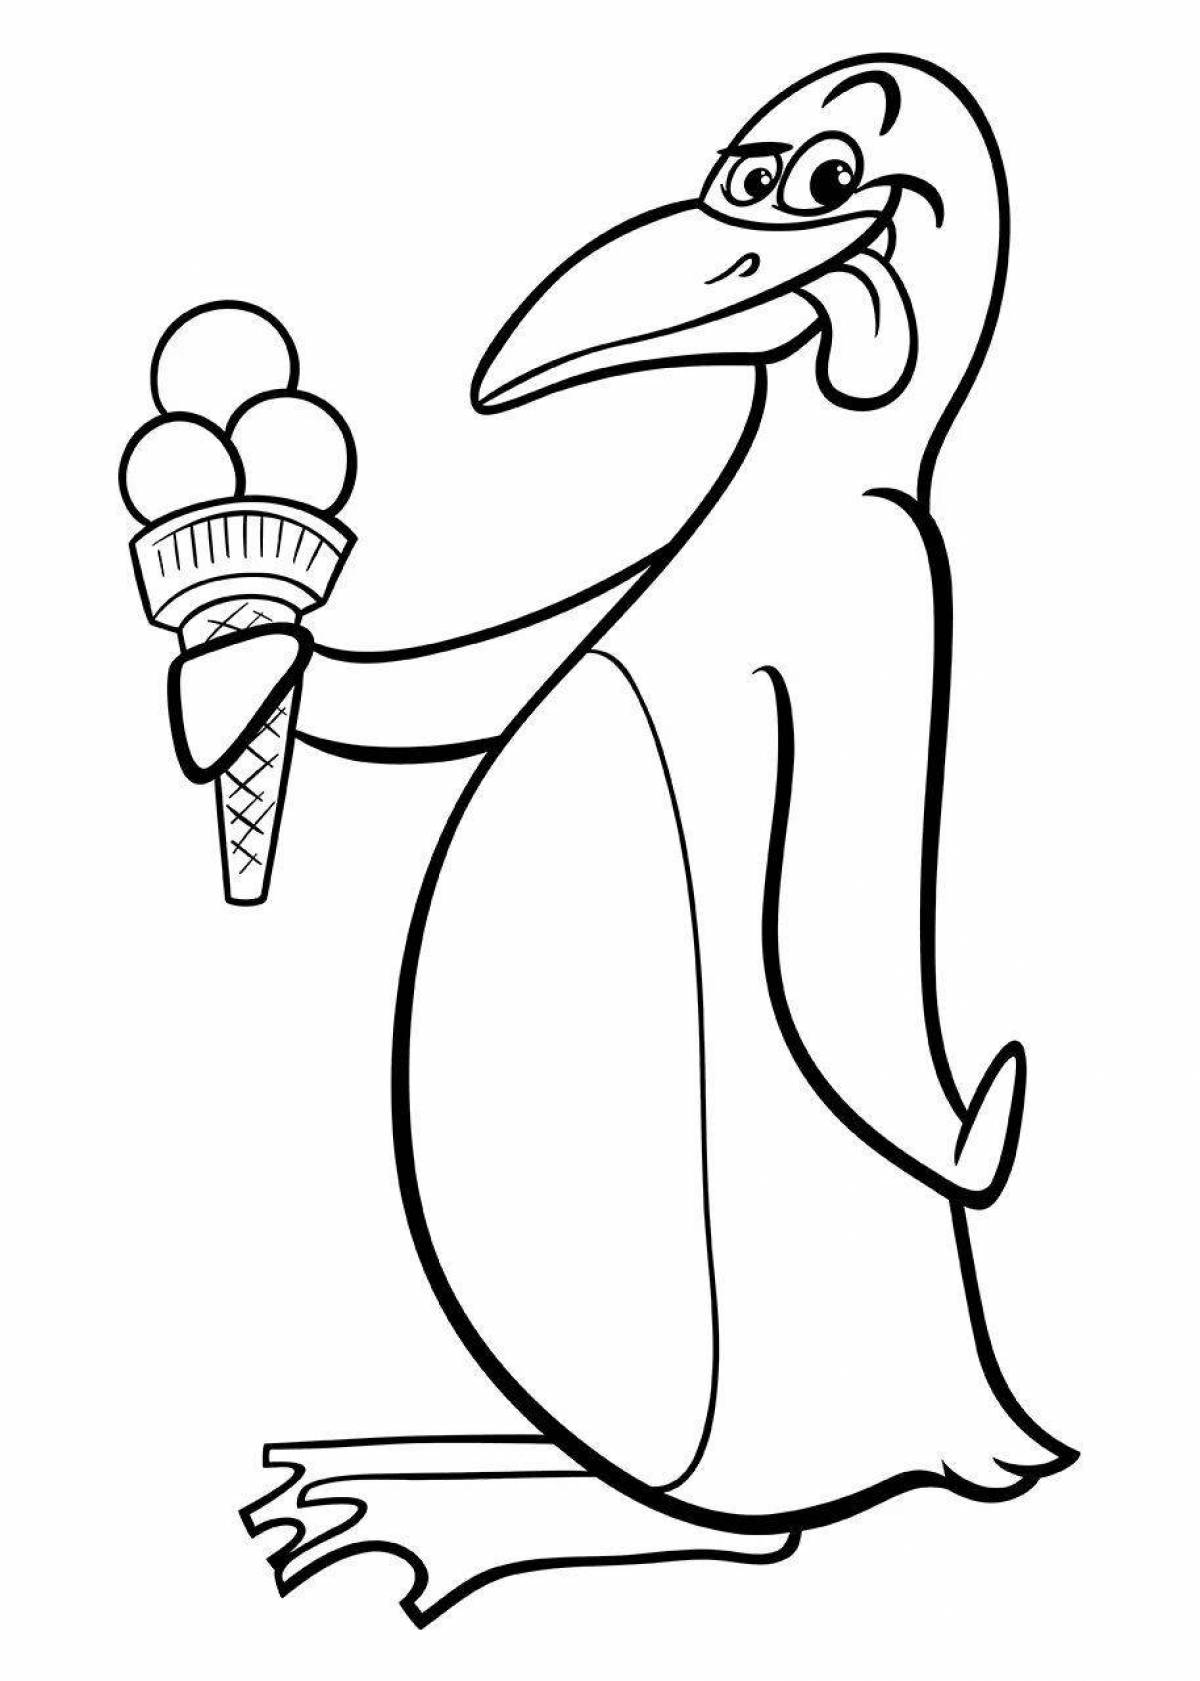 Colouring bright penguin with ice cream